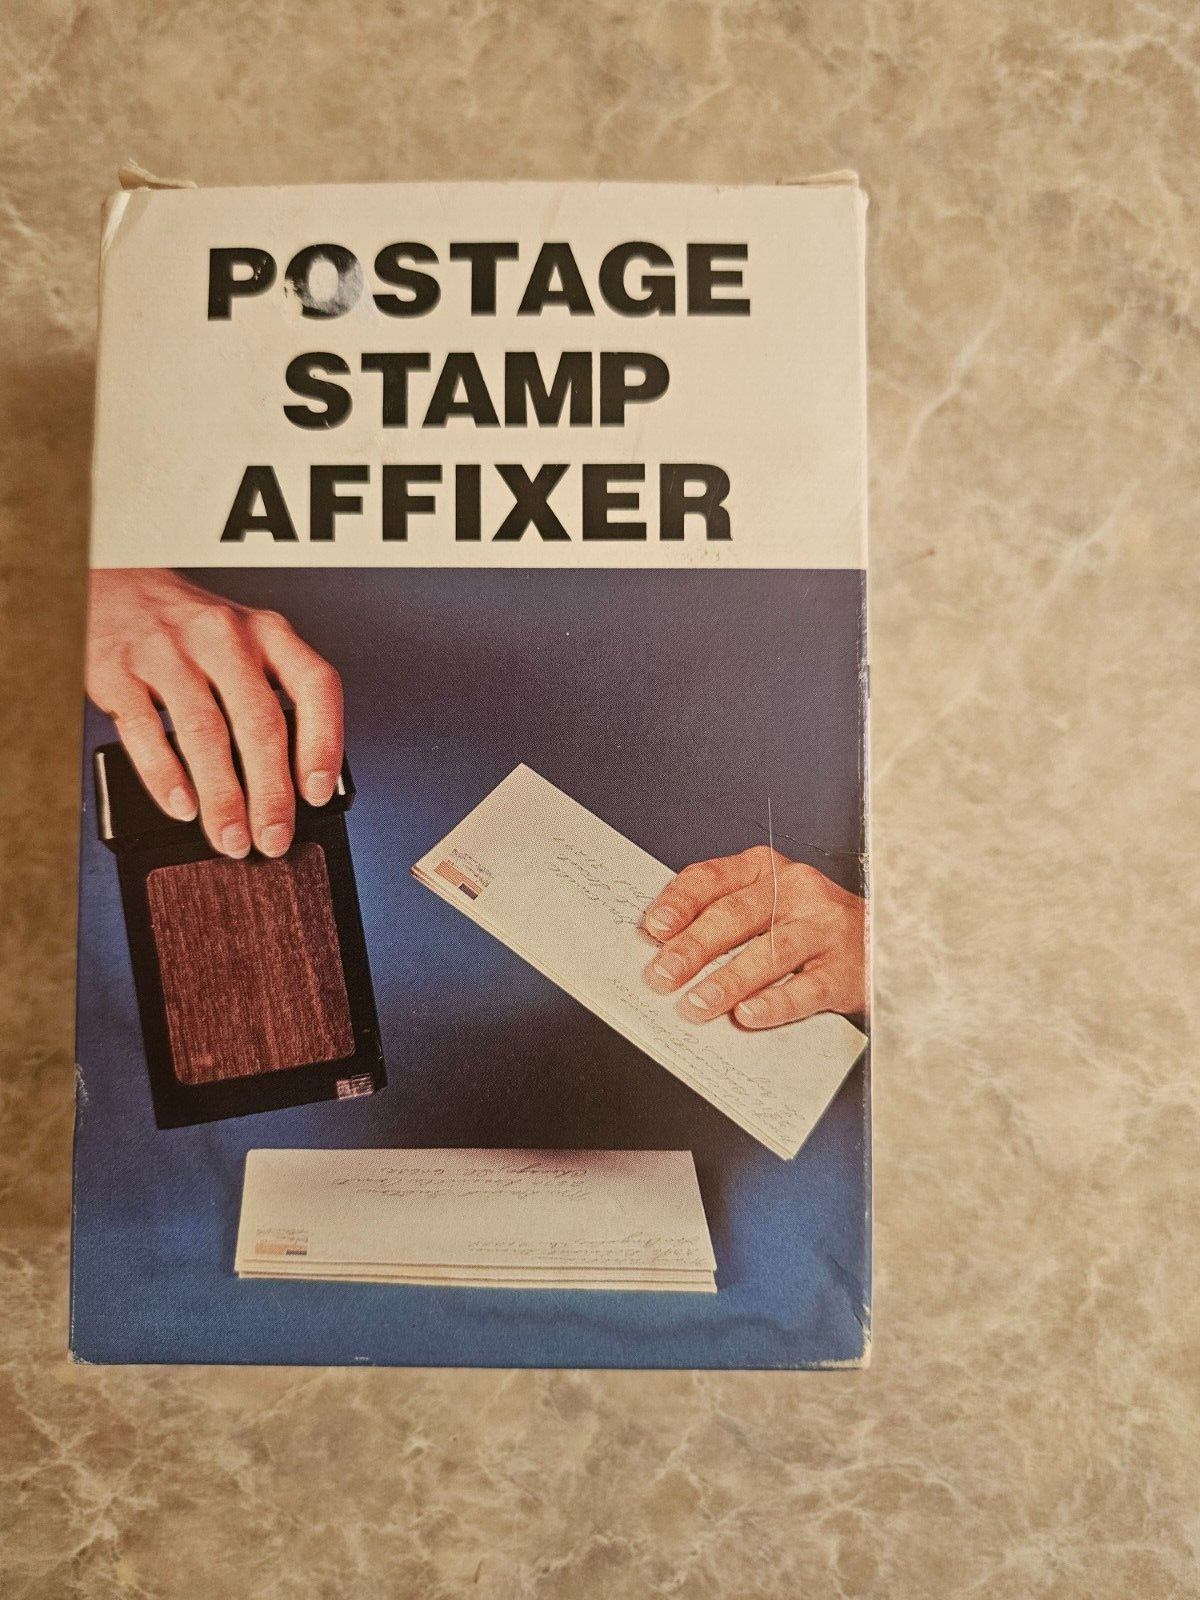 New Vintage Postage Stamp Affixer with original box - 